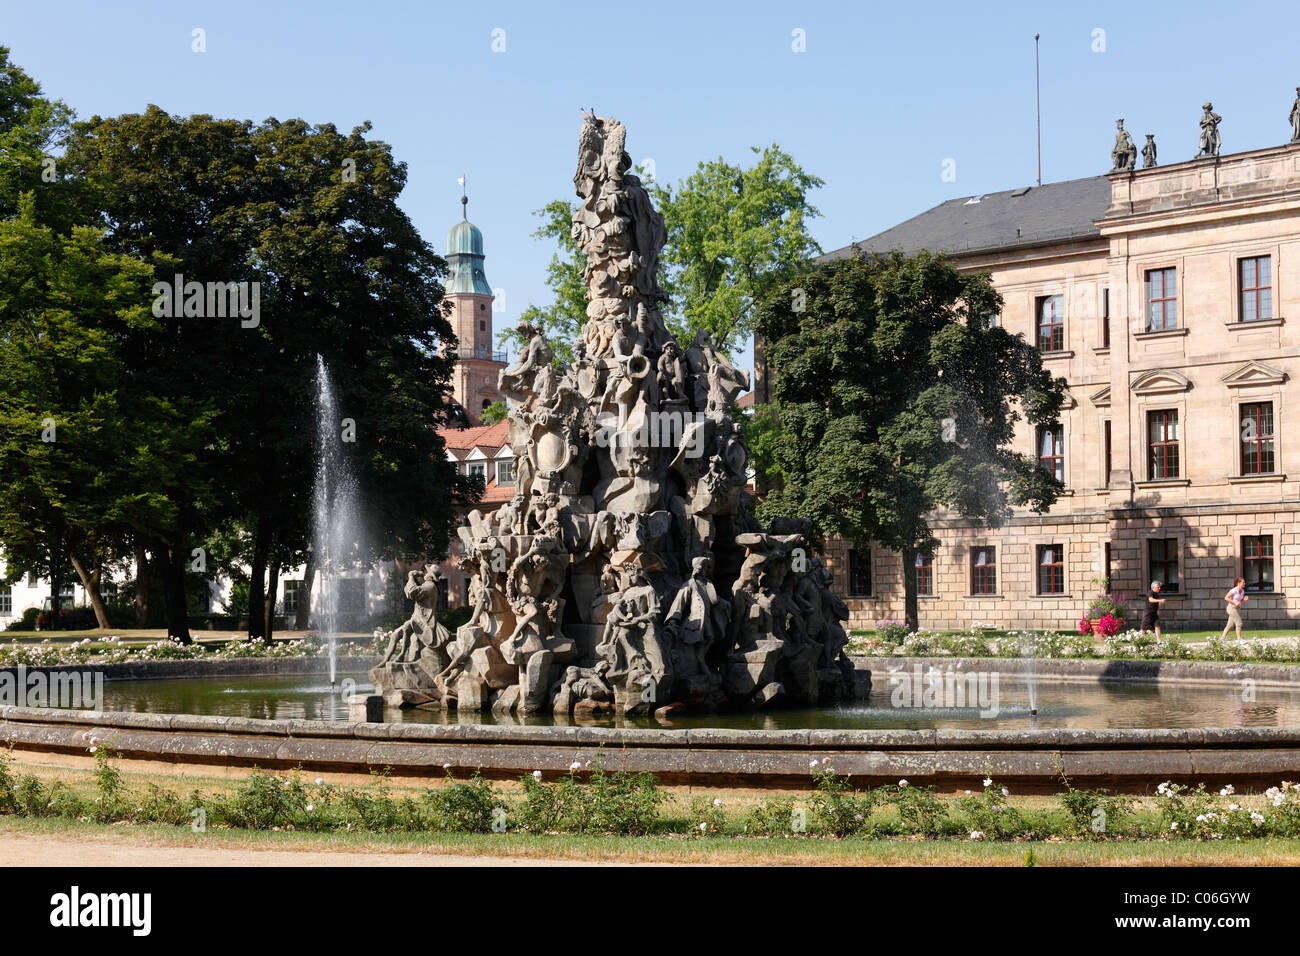 Hugenottenbrunnen Fountain in the palace garden, Erlangen, Franconia, Bavaria, Germany, Europe Stock Photo